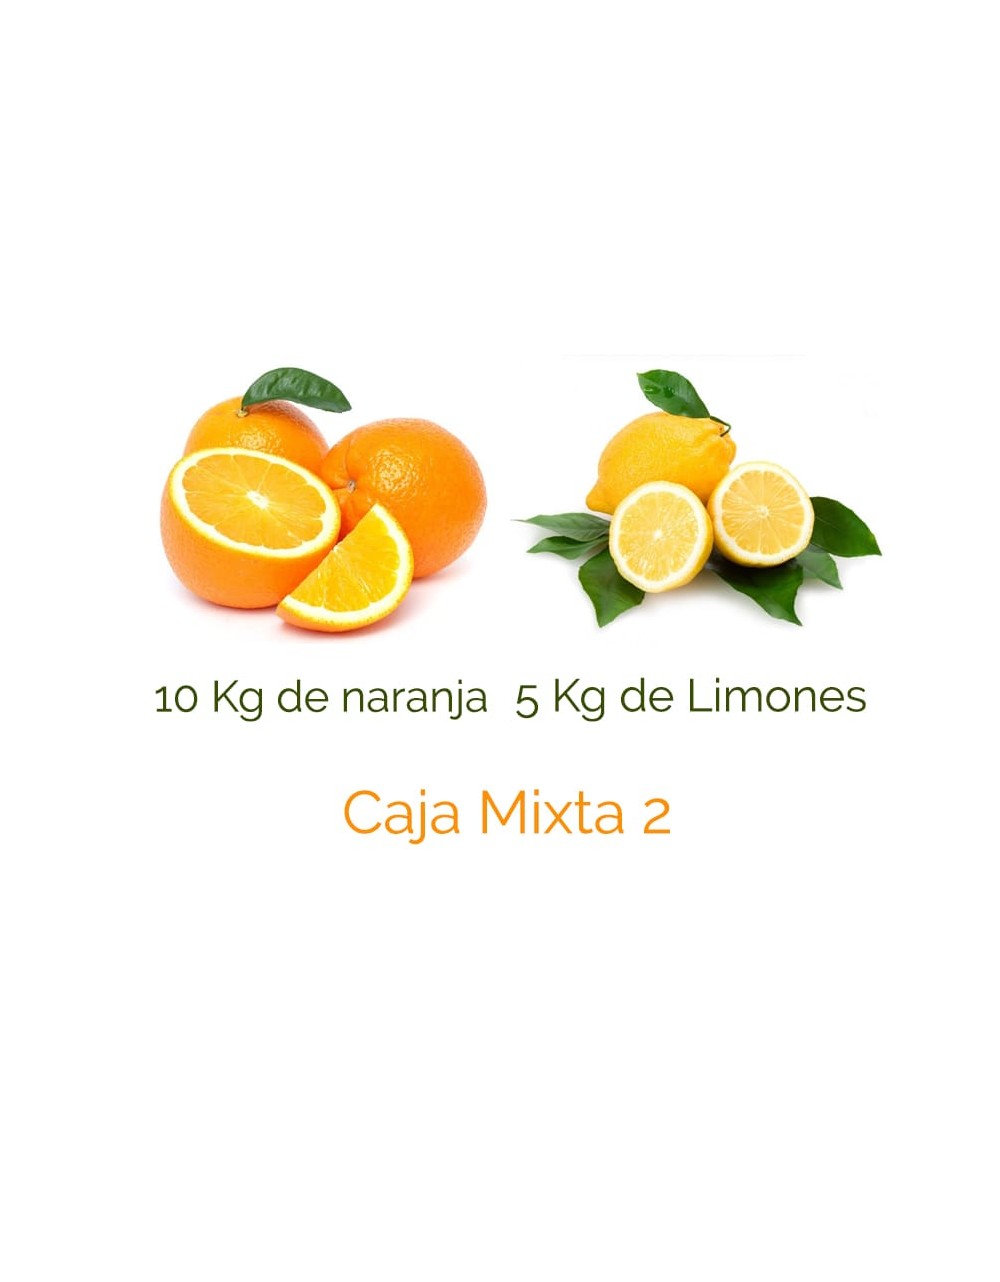 Caja Mixta 2 de 15 kg - Naranjas y limones